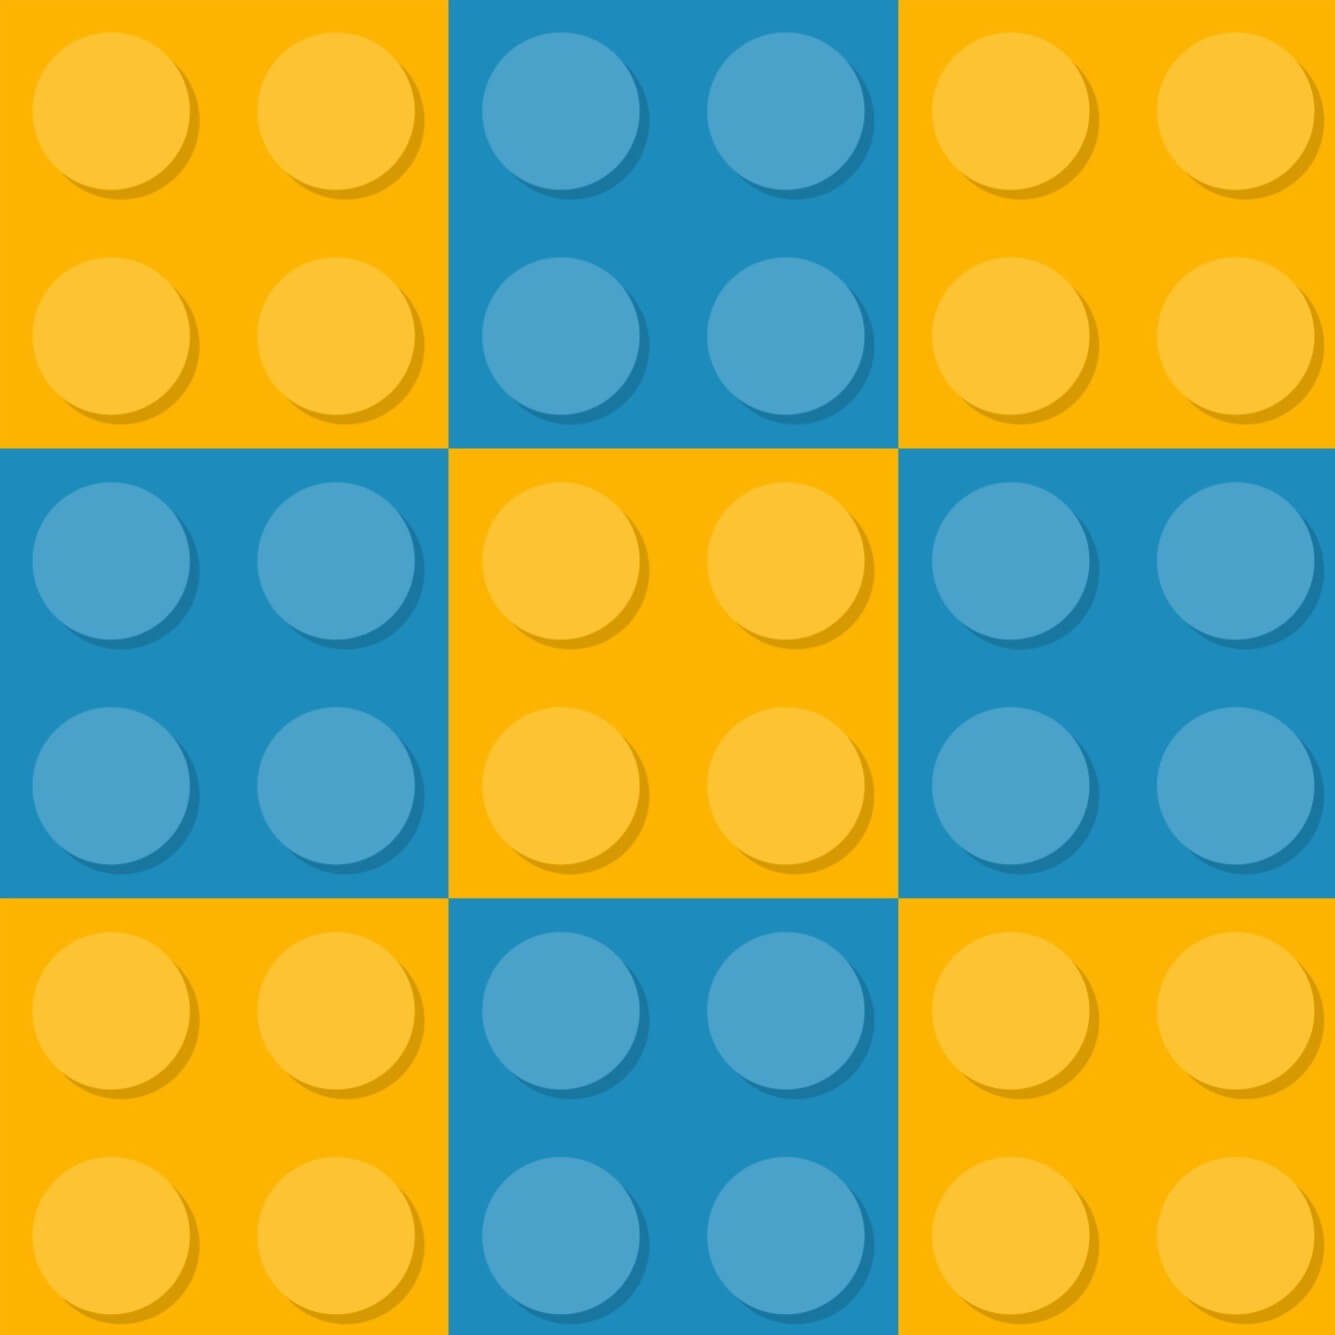 Week 8 – Lego brick